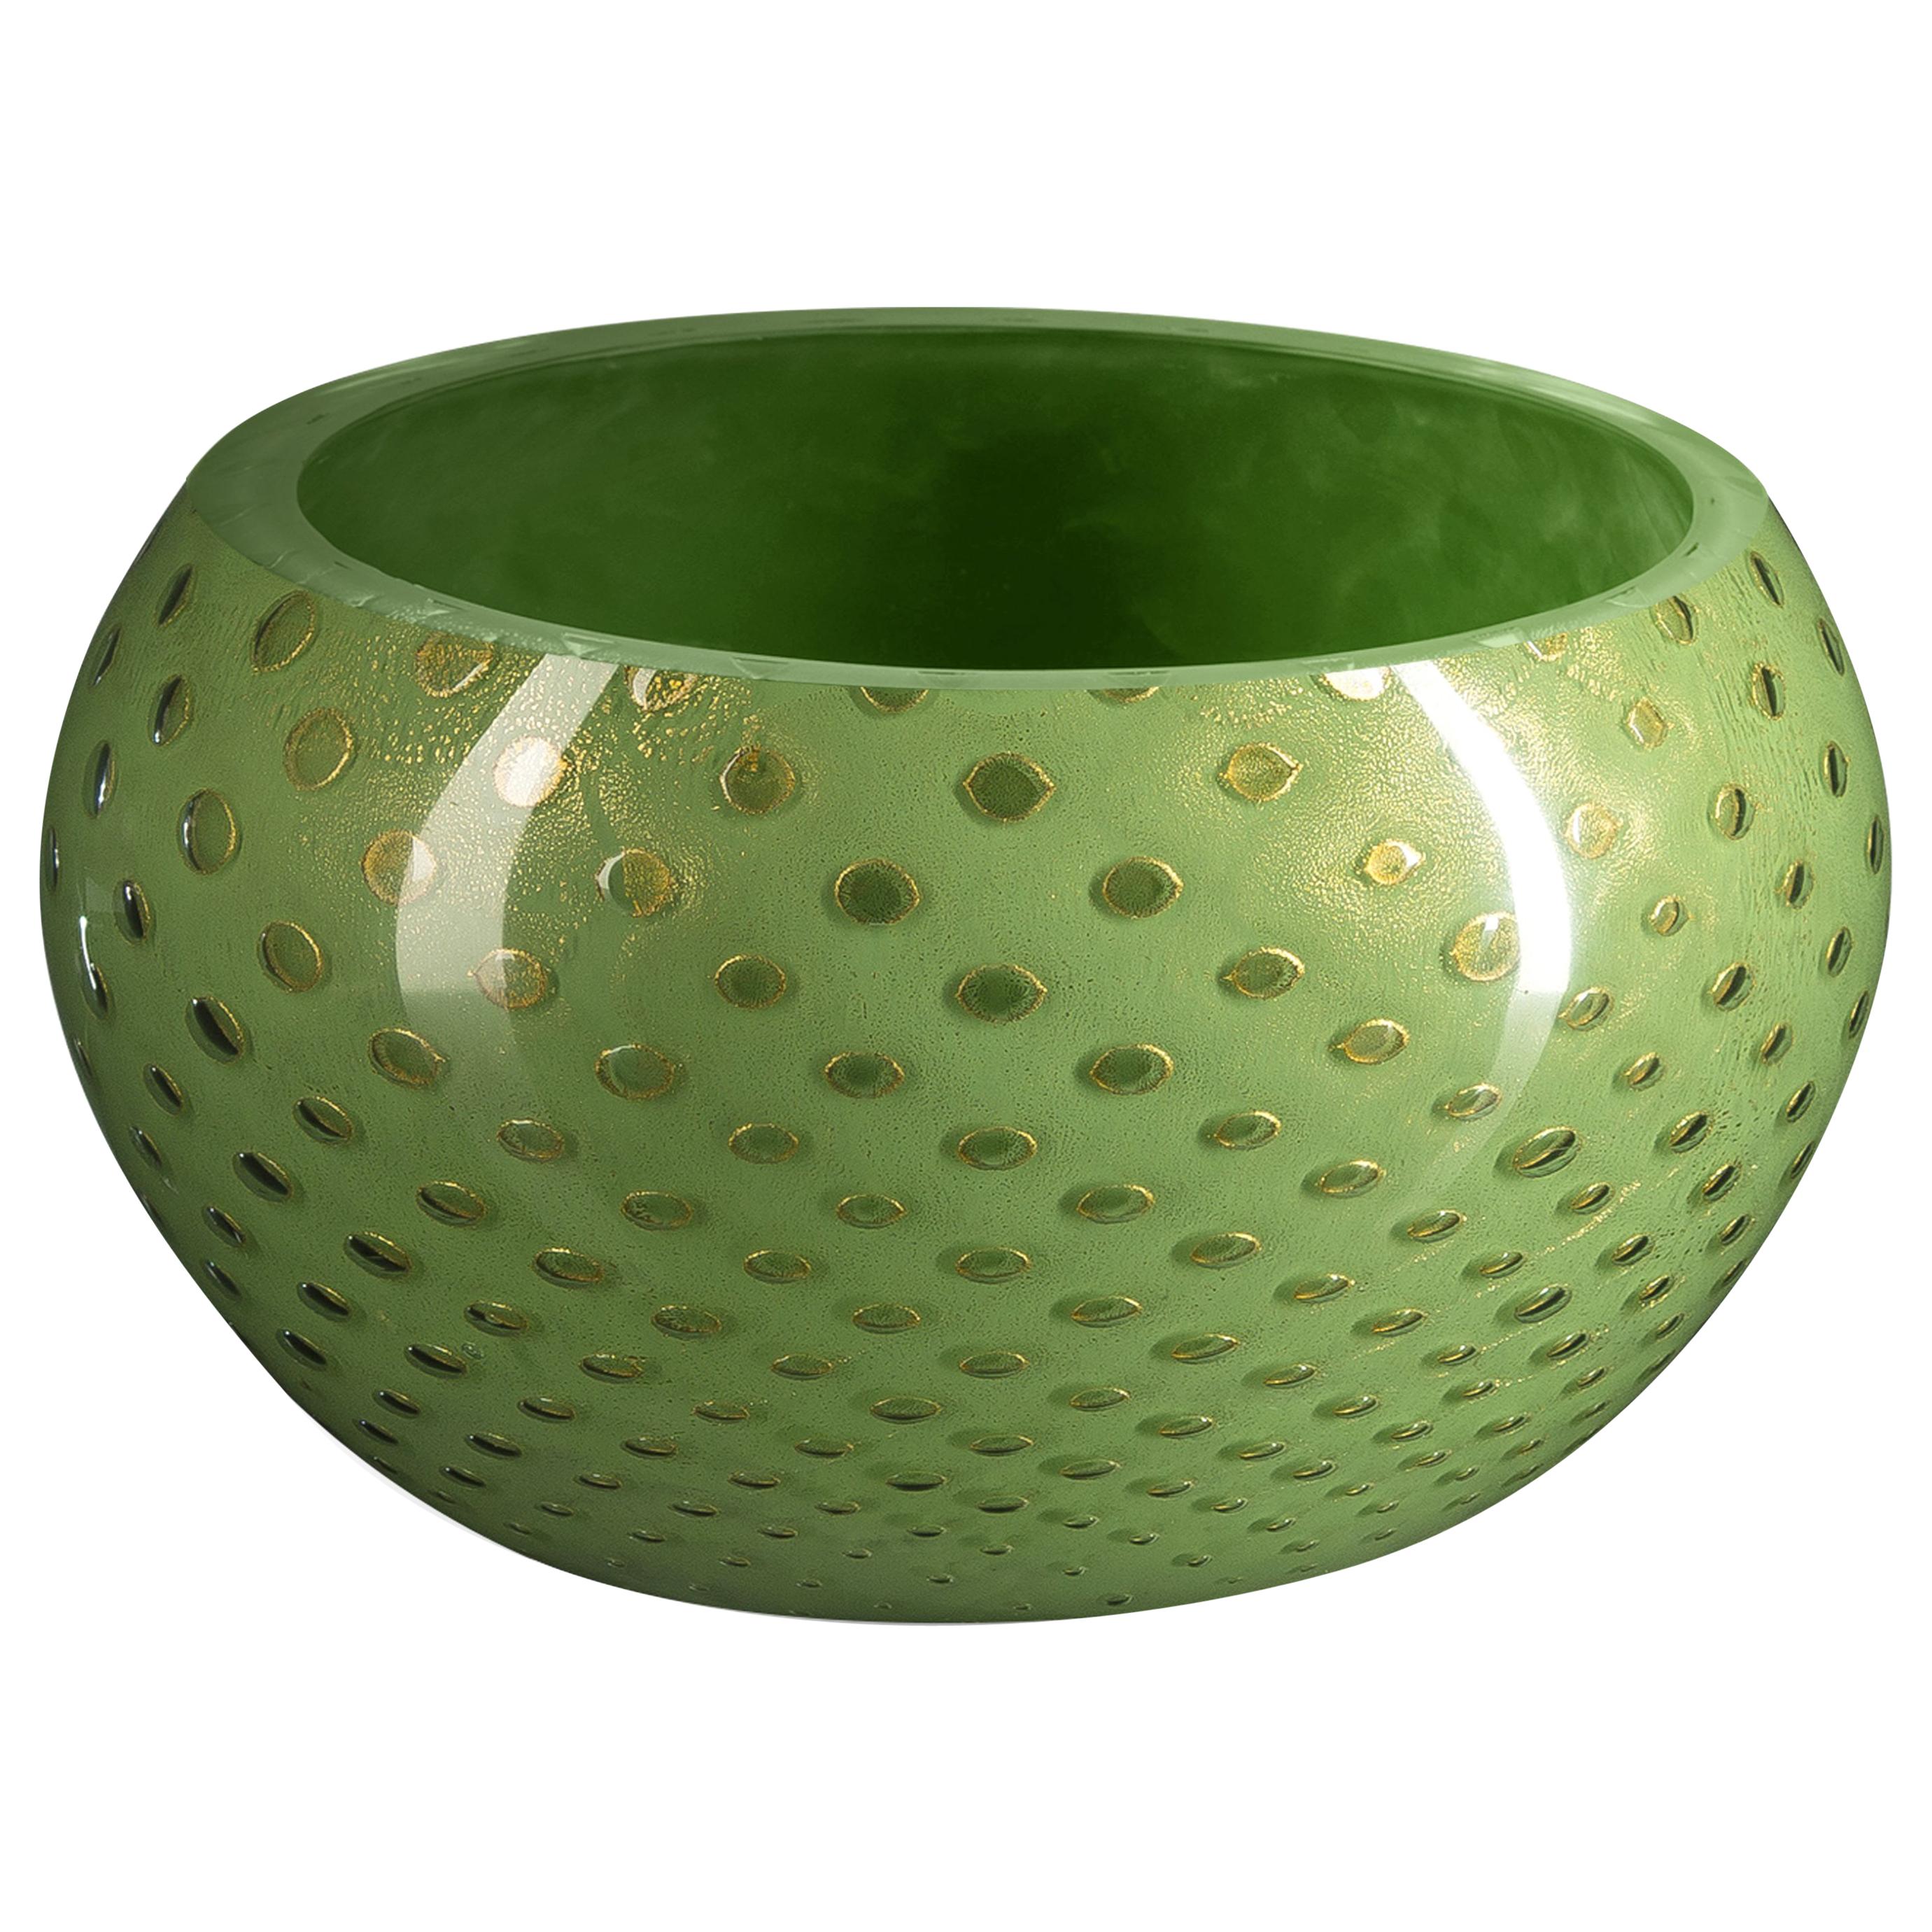 Bowl Mocenigo, Muranese Glass, Gold 24-Karat and Light Green, Italy